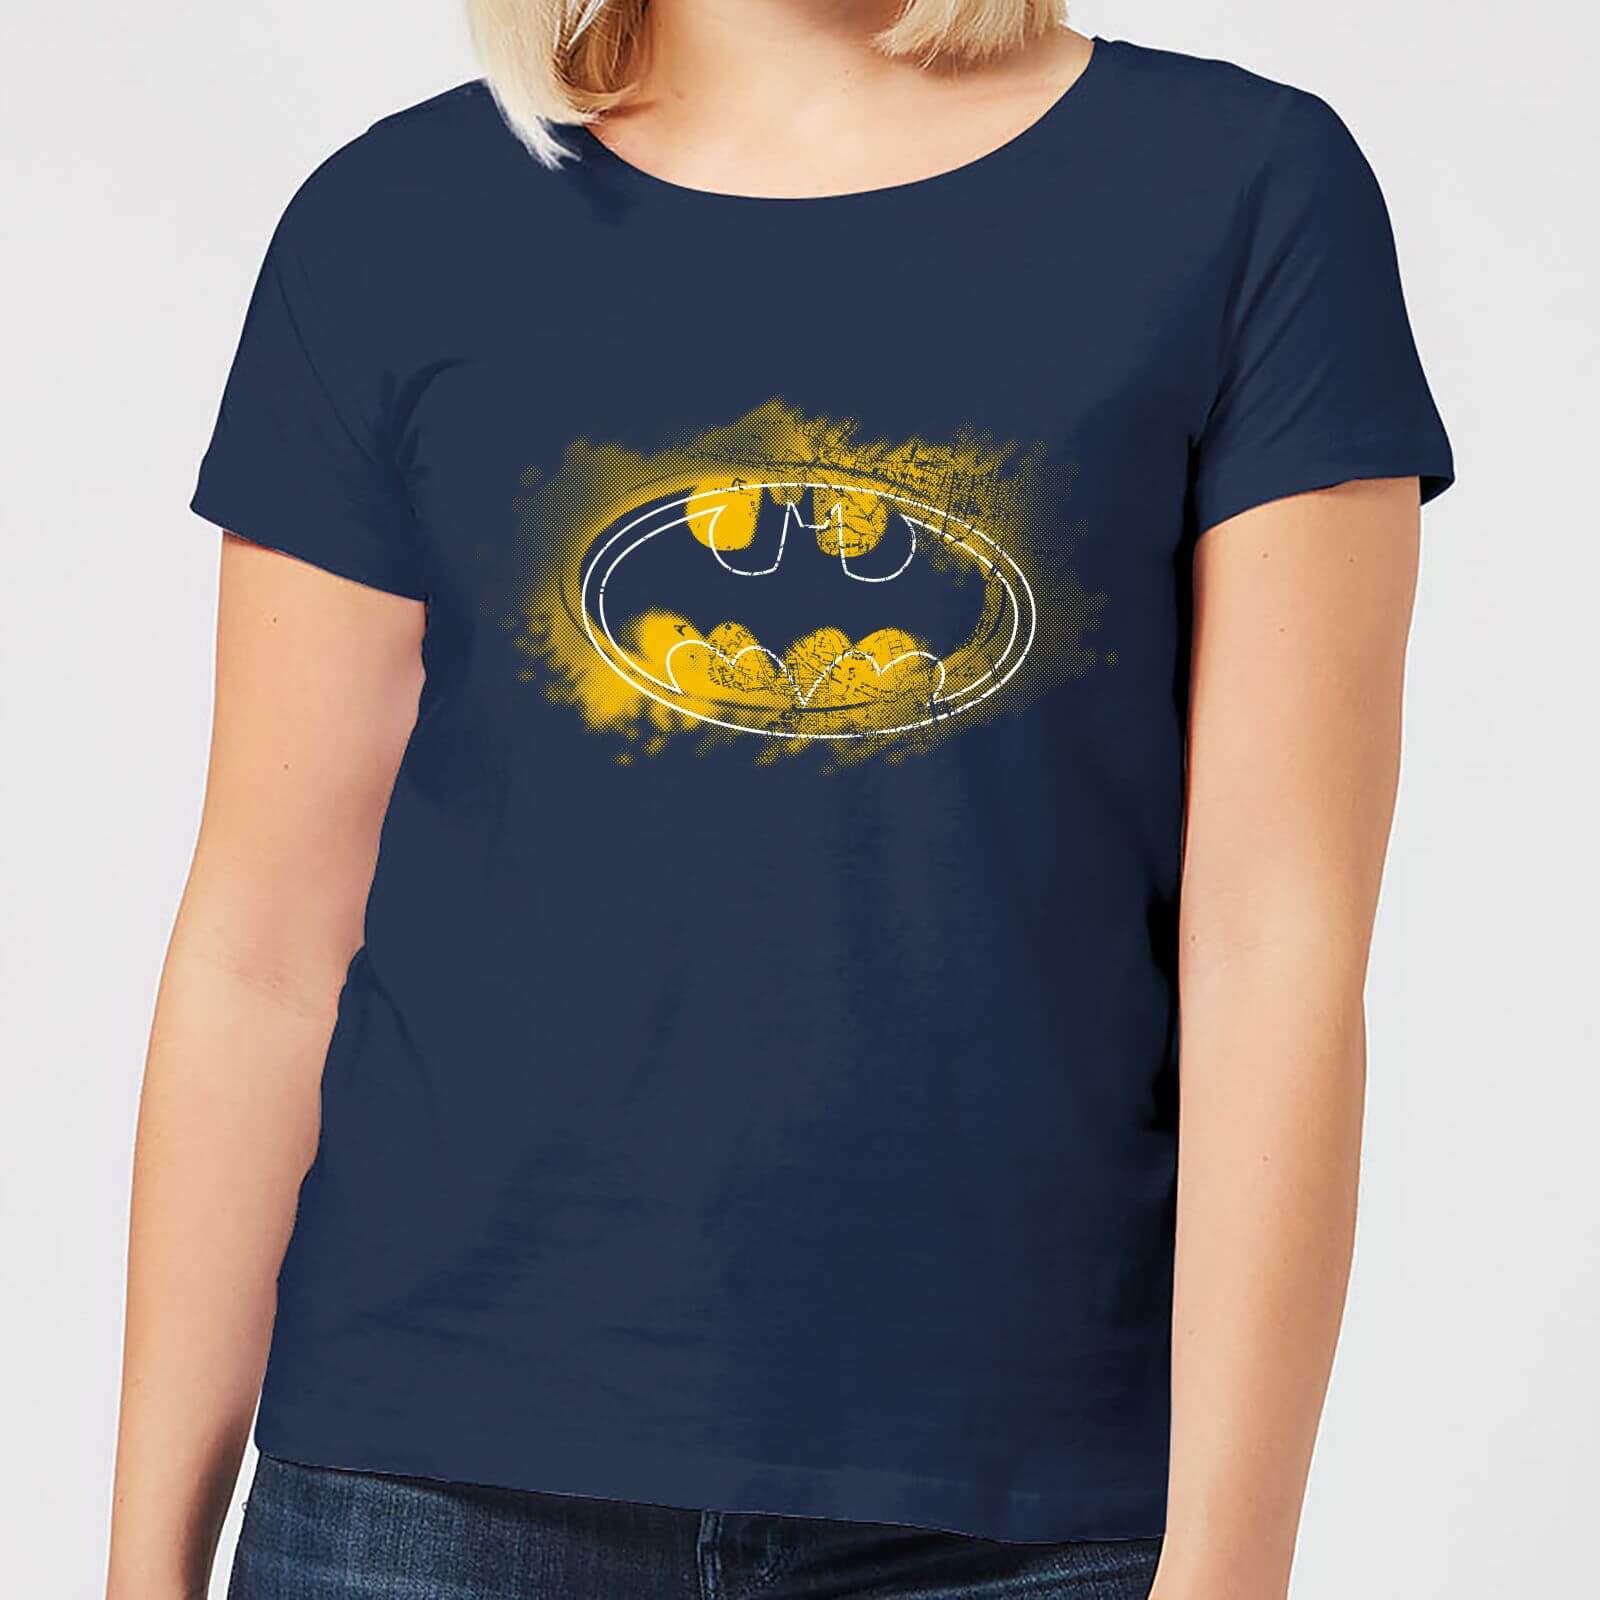 t-shirt dc comics batman spray logo - navy - donna - xl - blu navy